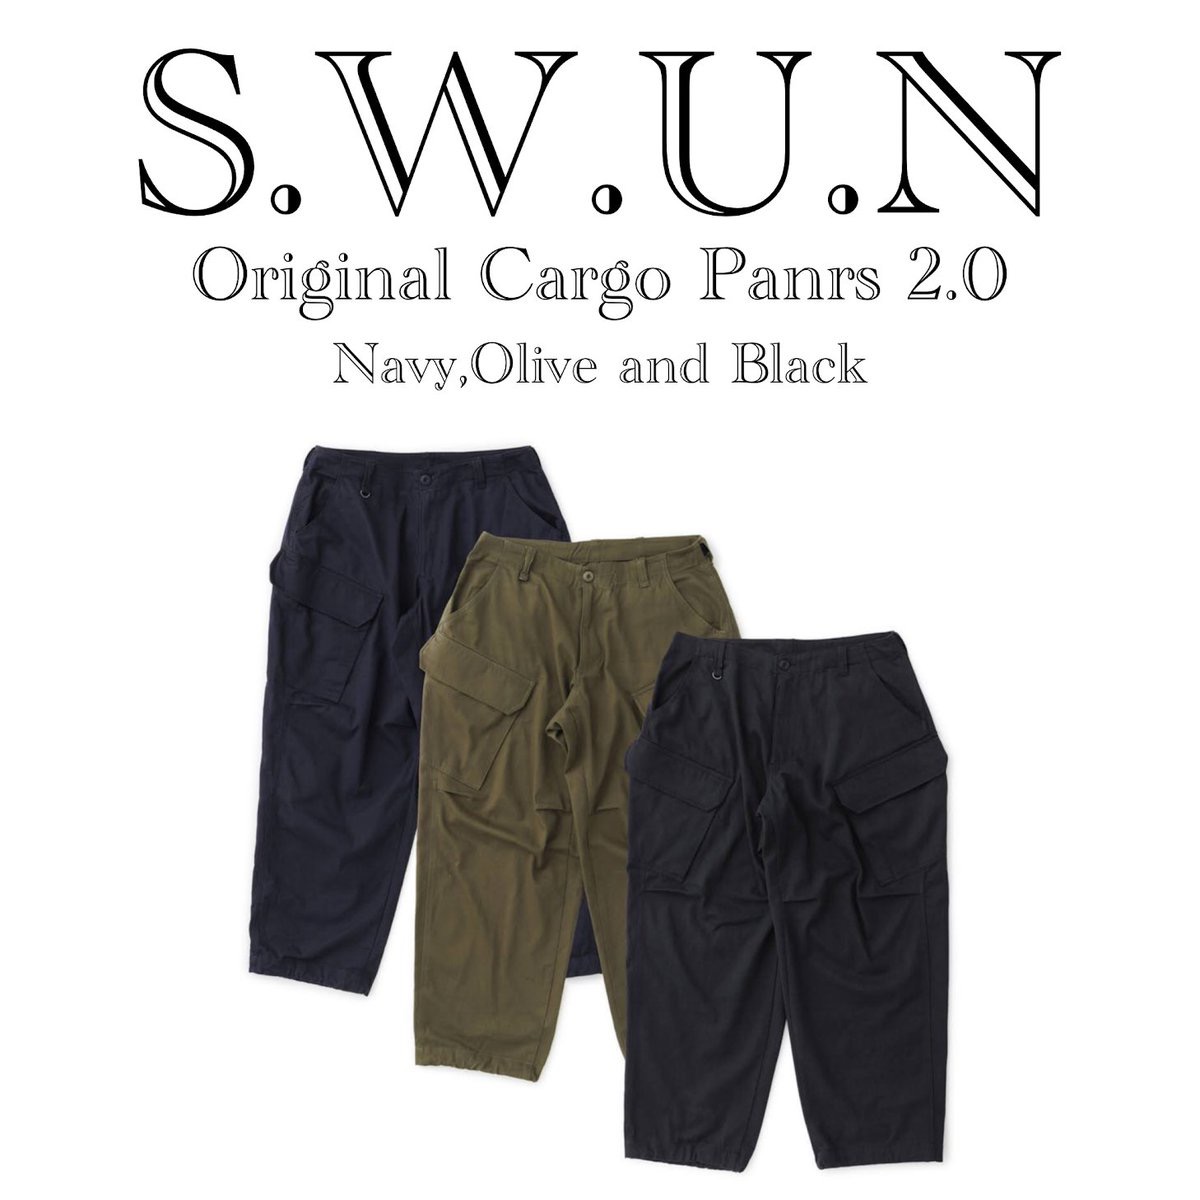 S.W.U.N Original Cargo Pants 2.0 ブラック-